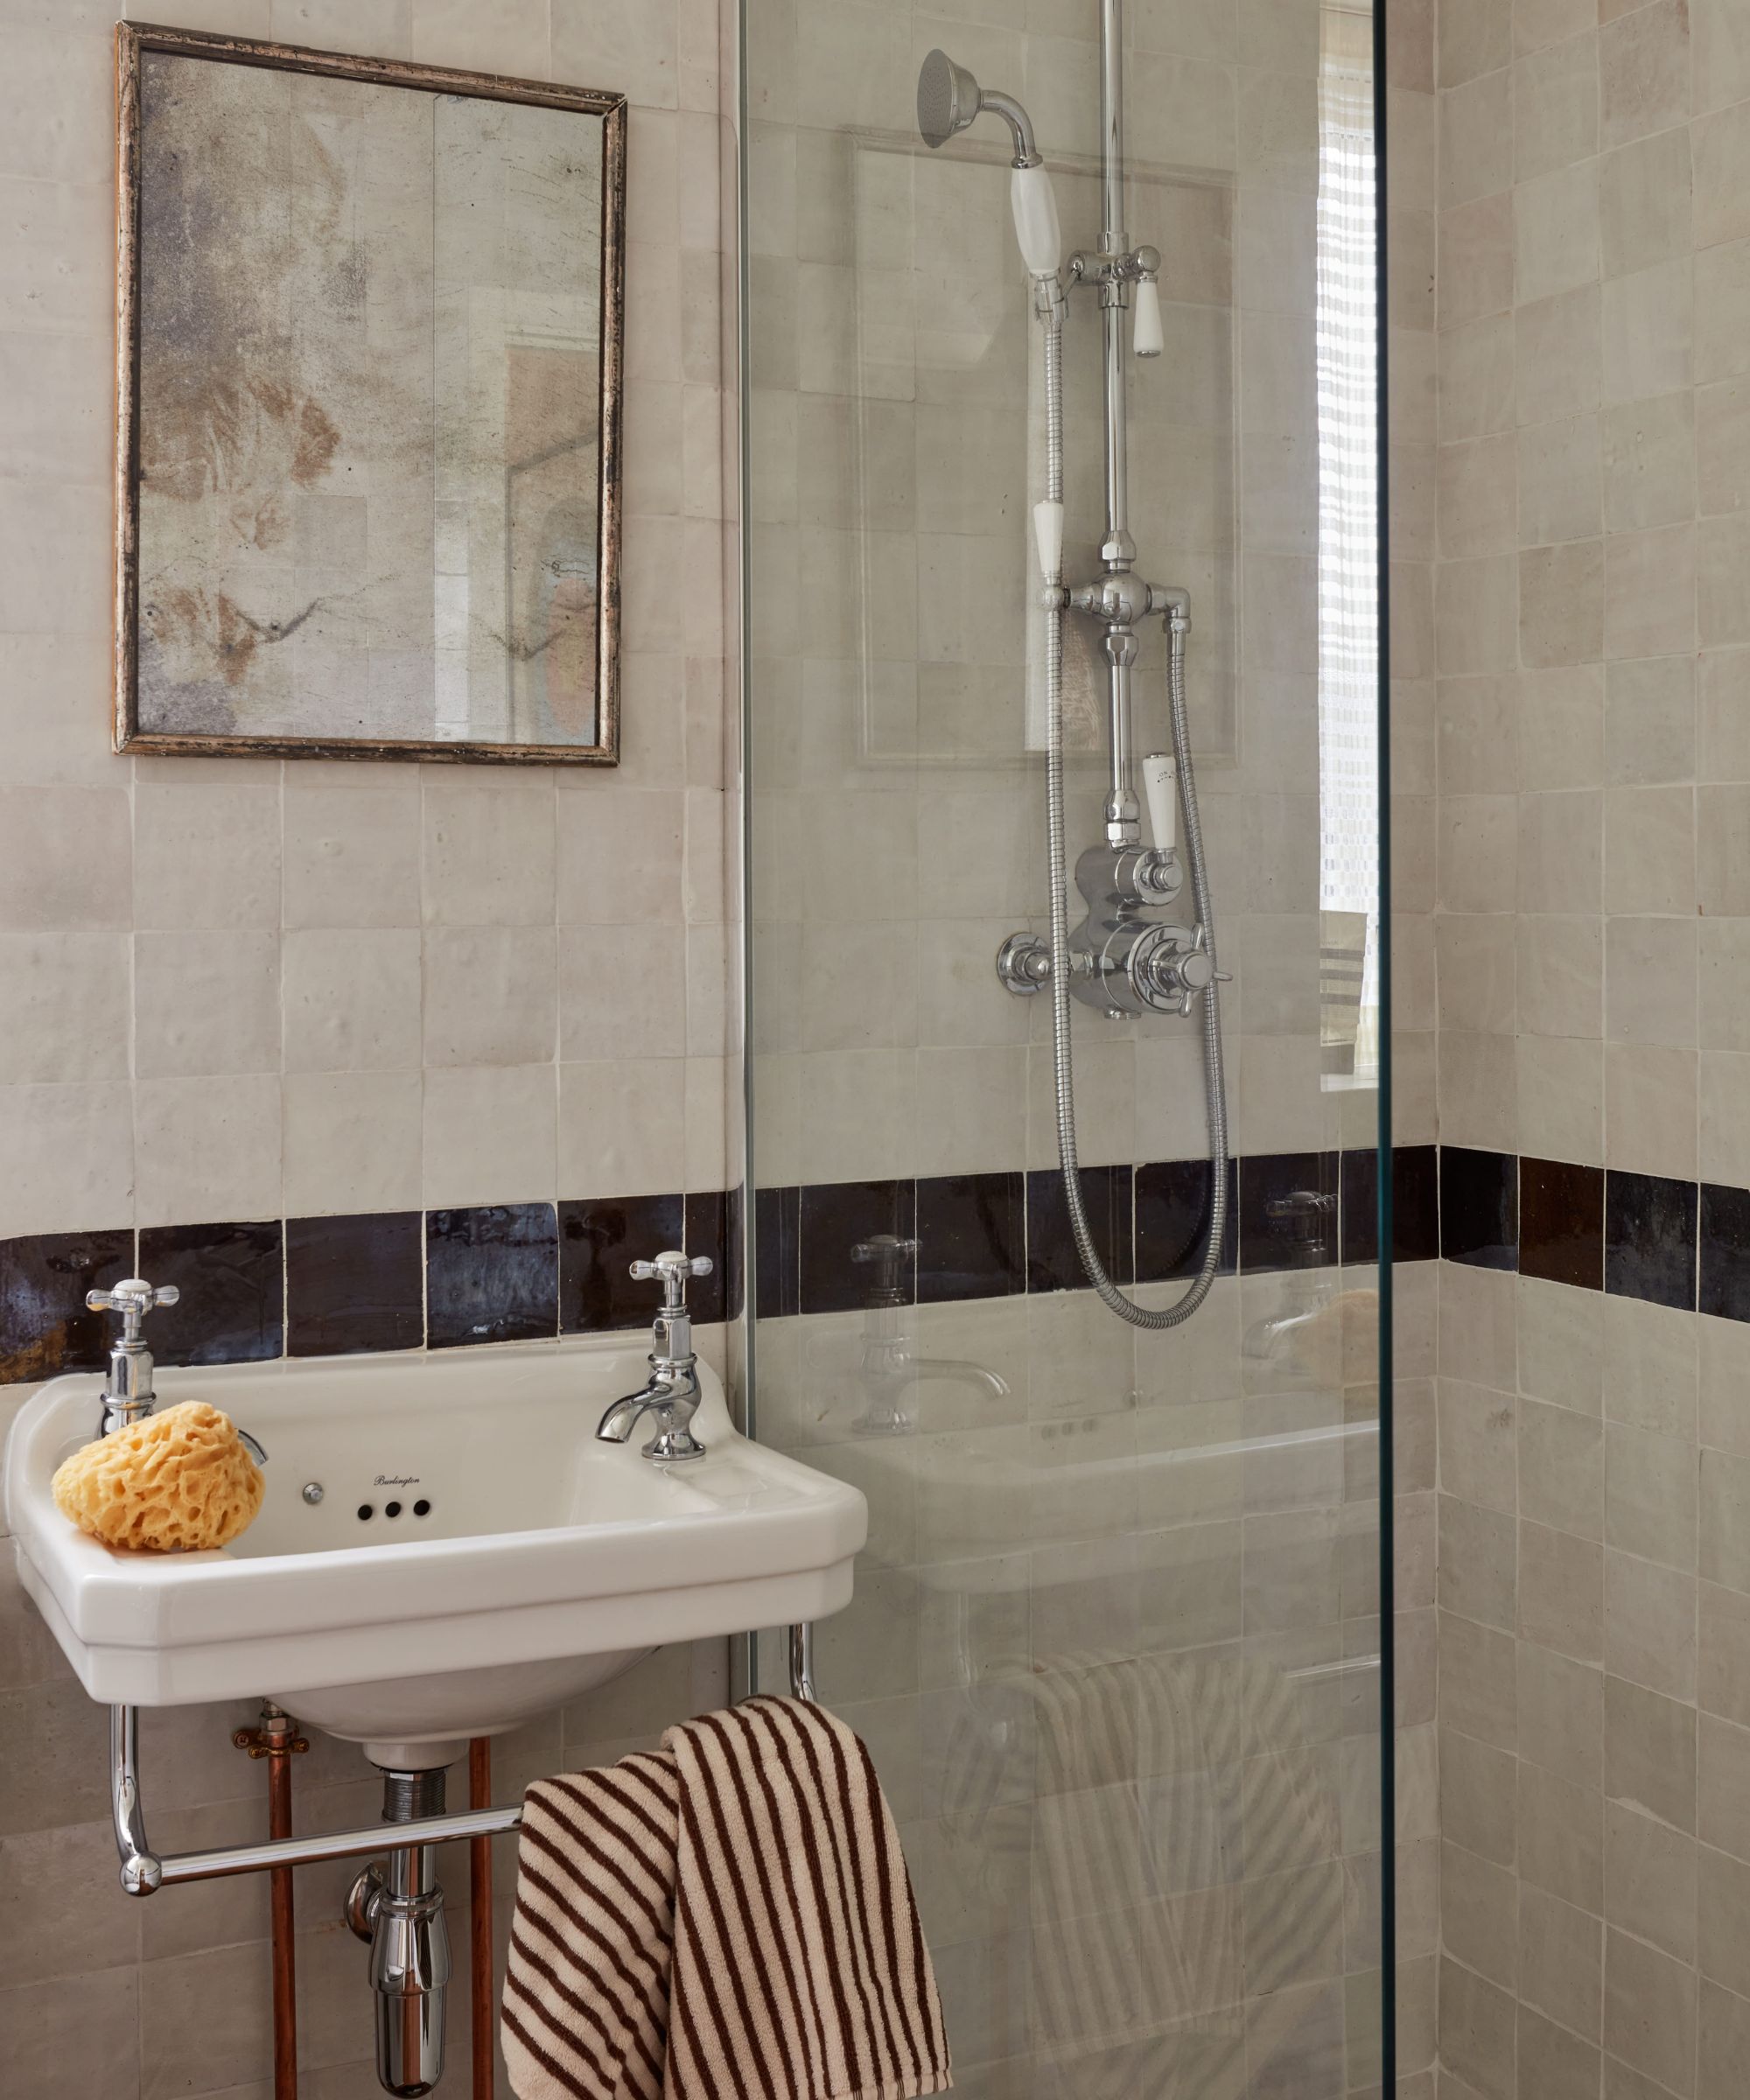 warm bathroom with brown border tiles